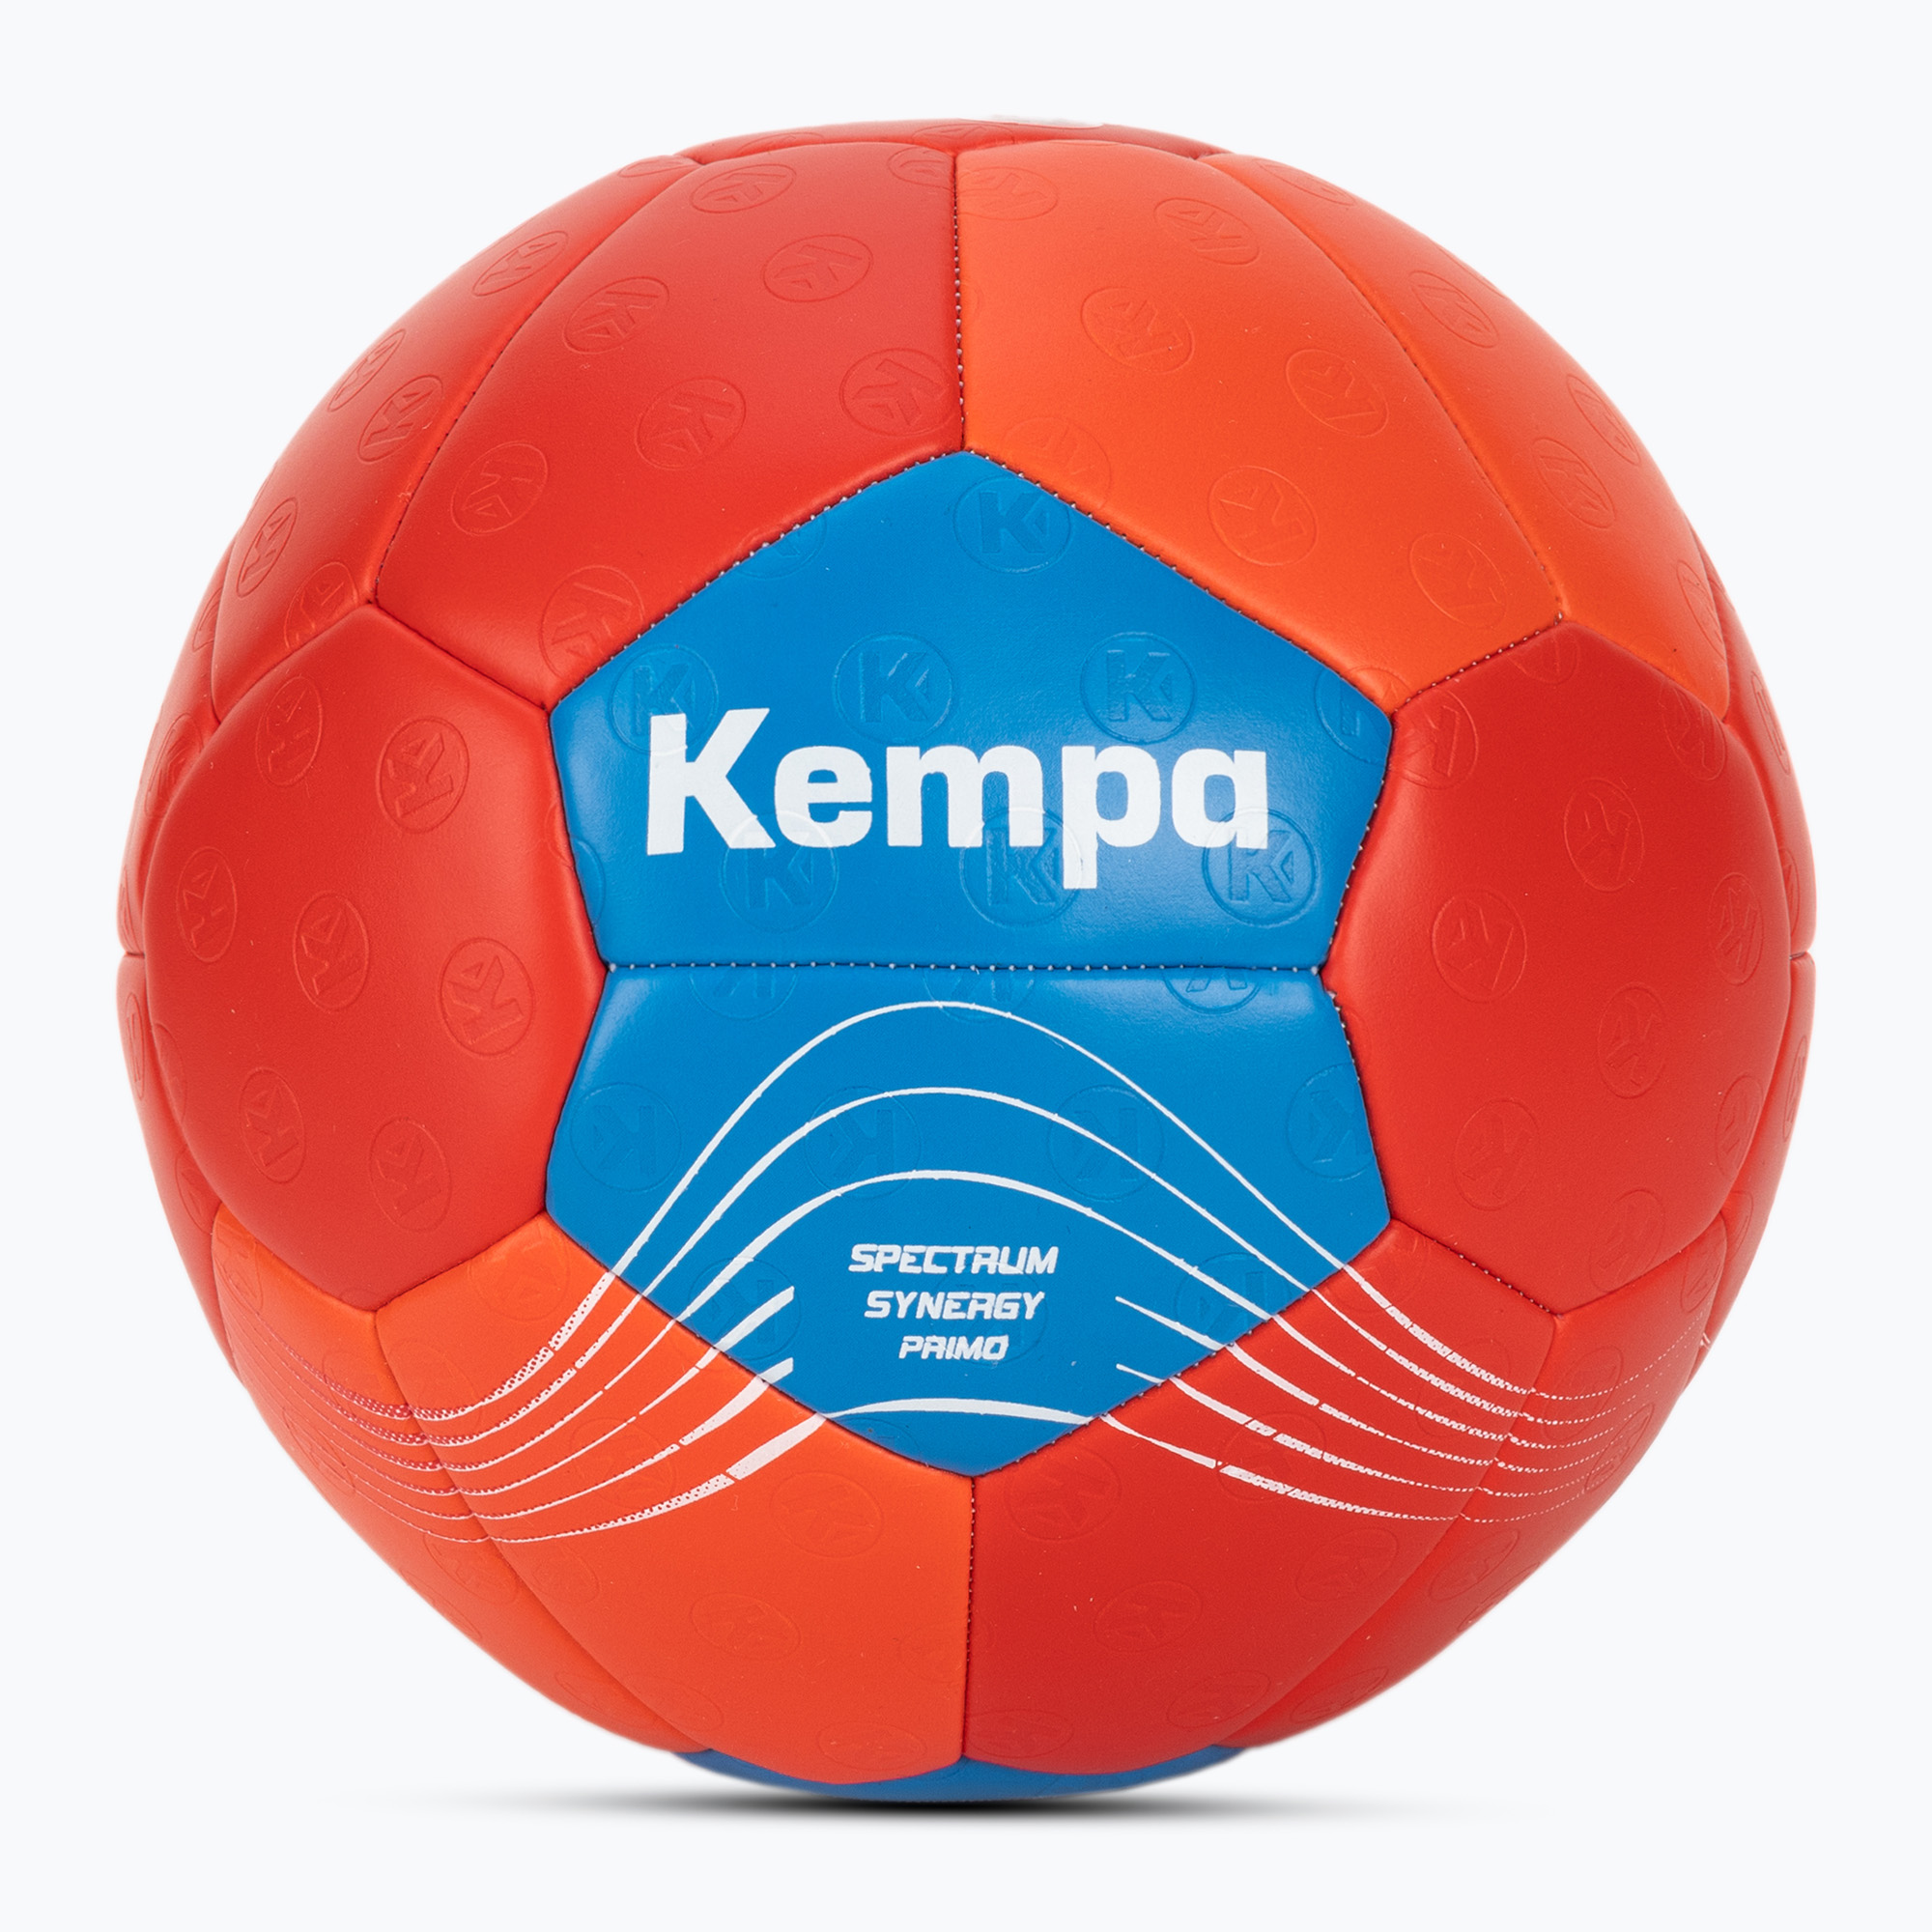 Kempa Spectrum Synergy Primo handbal 200191501/1 mărimea 1